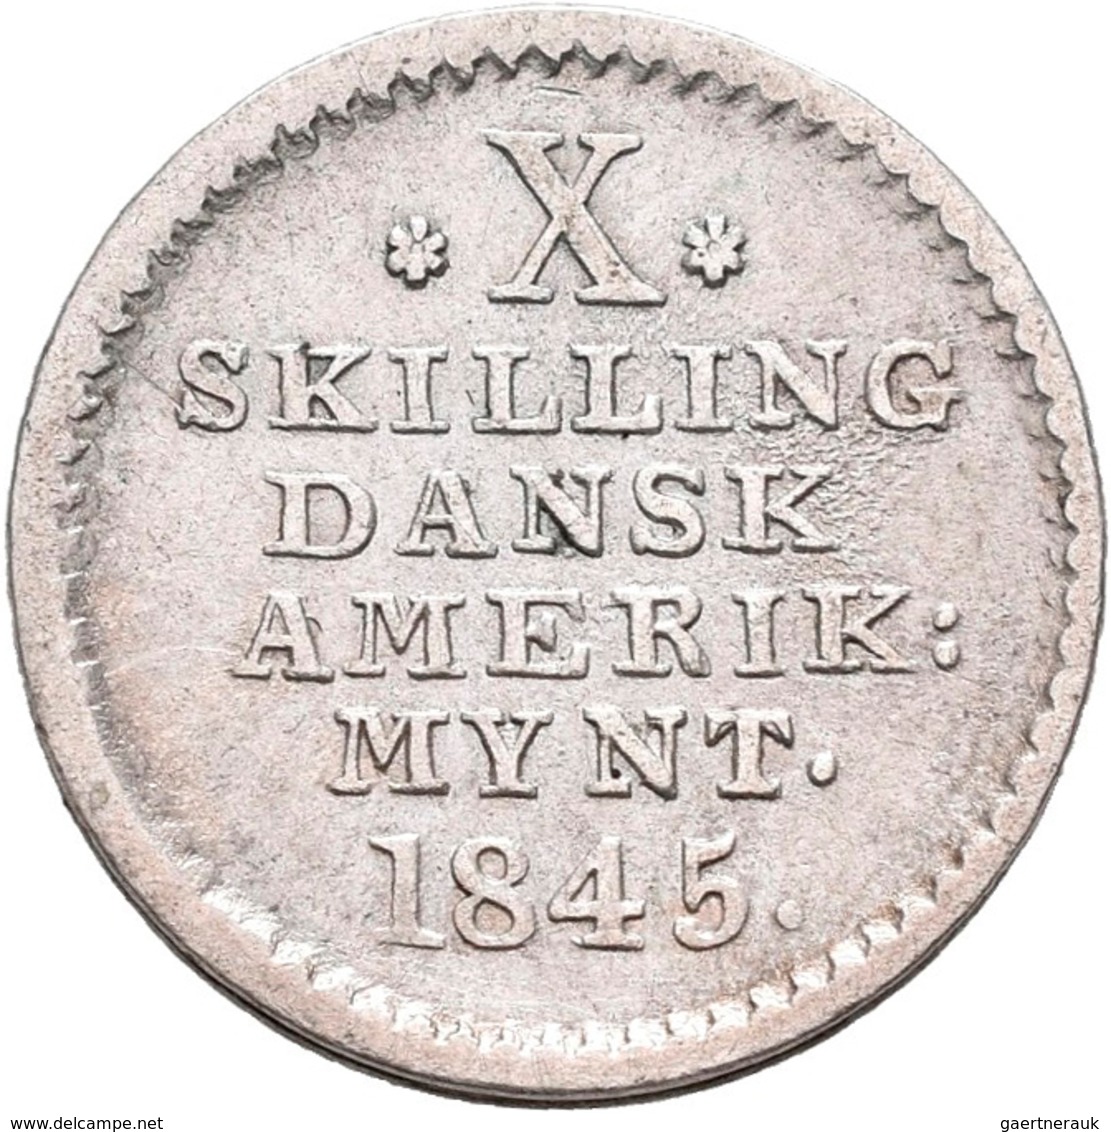 Dänisch-Westindien: (seit 1917 U.S. Virgin Islands) Christian VIII. 1839-1848: 10 Skilling 1845. KM# - West Indies